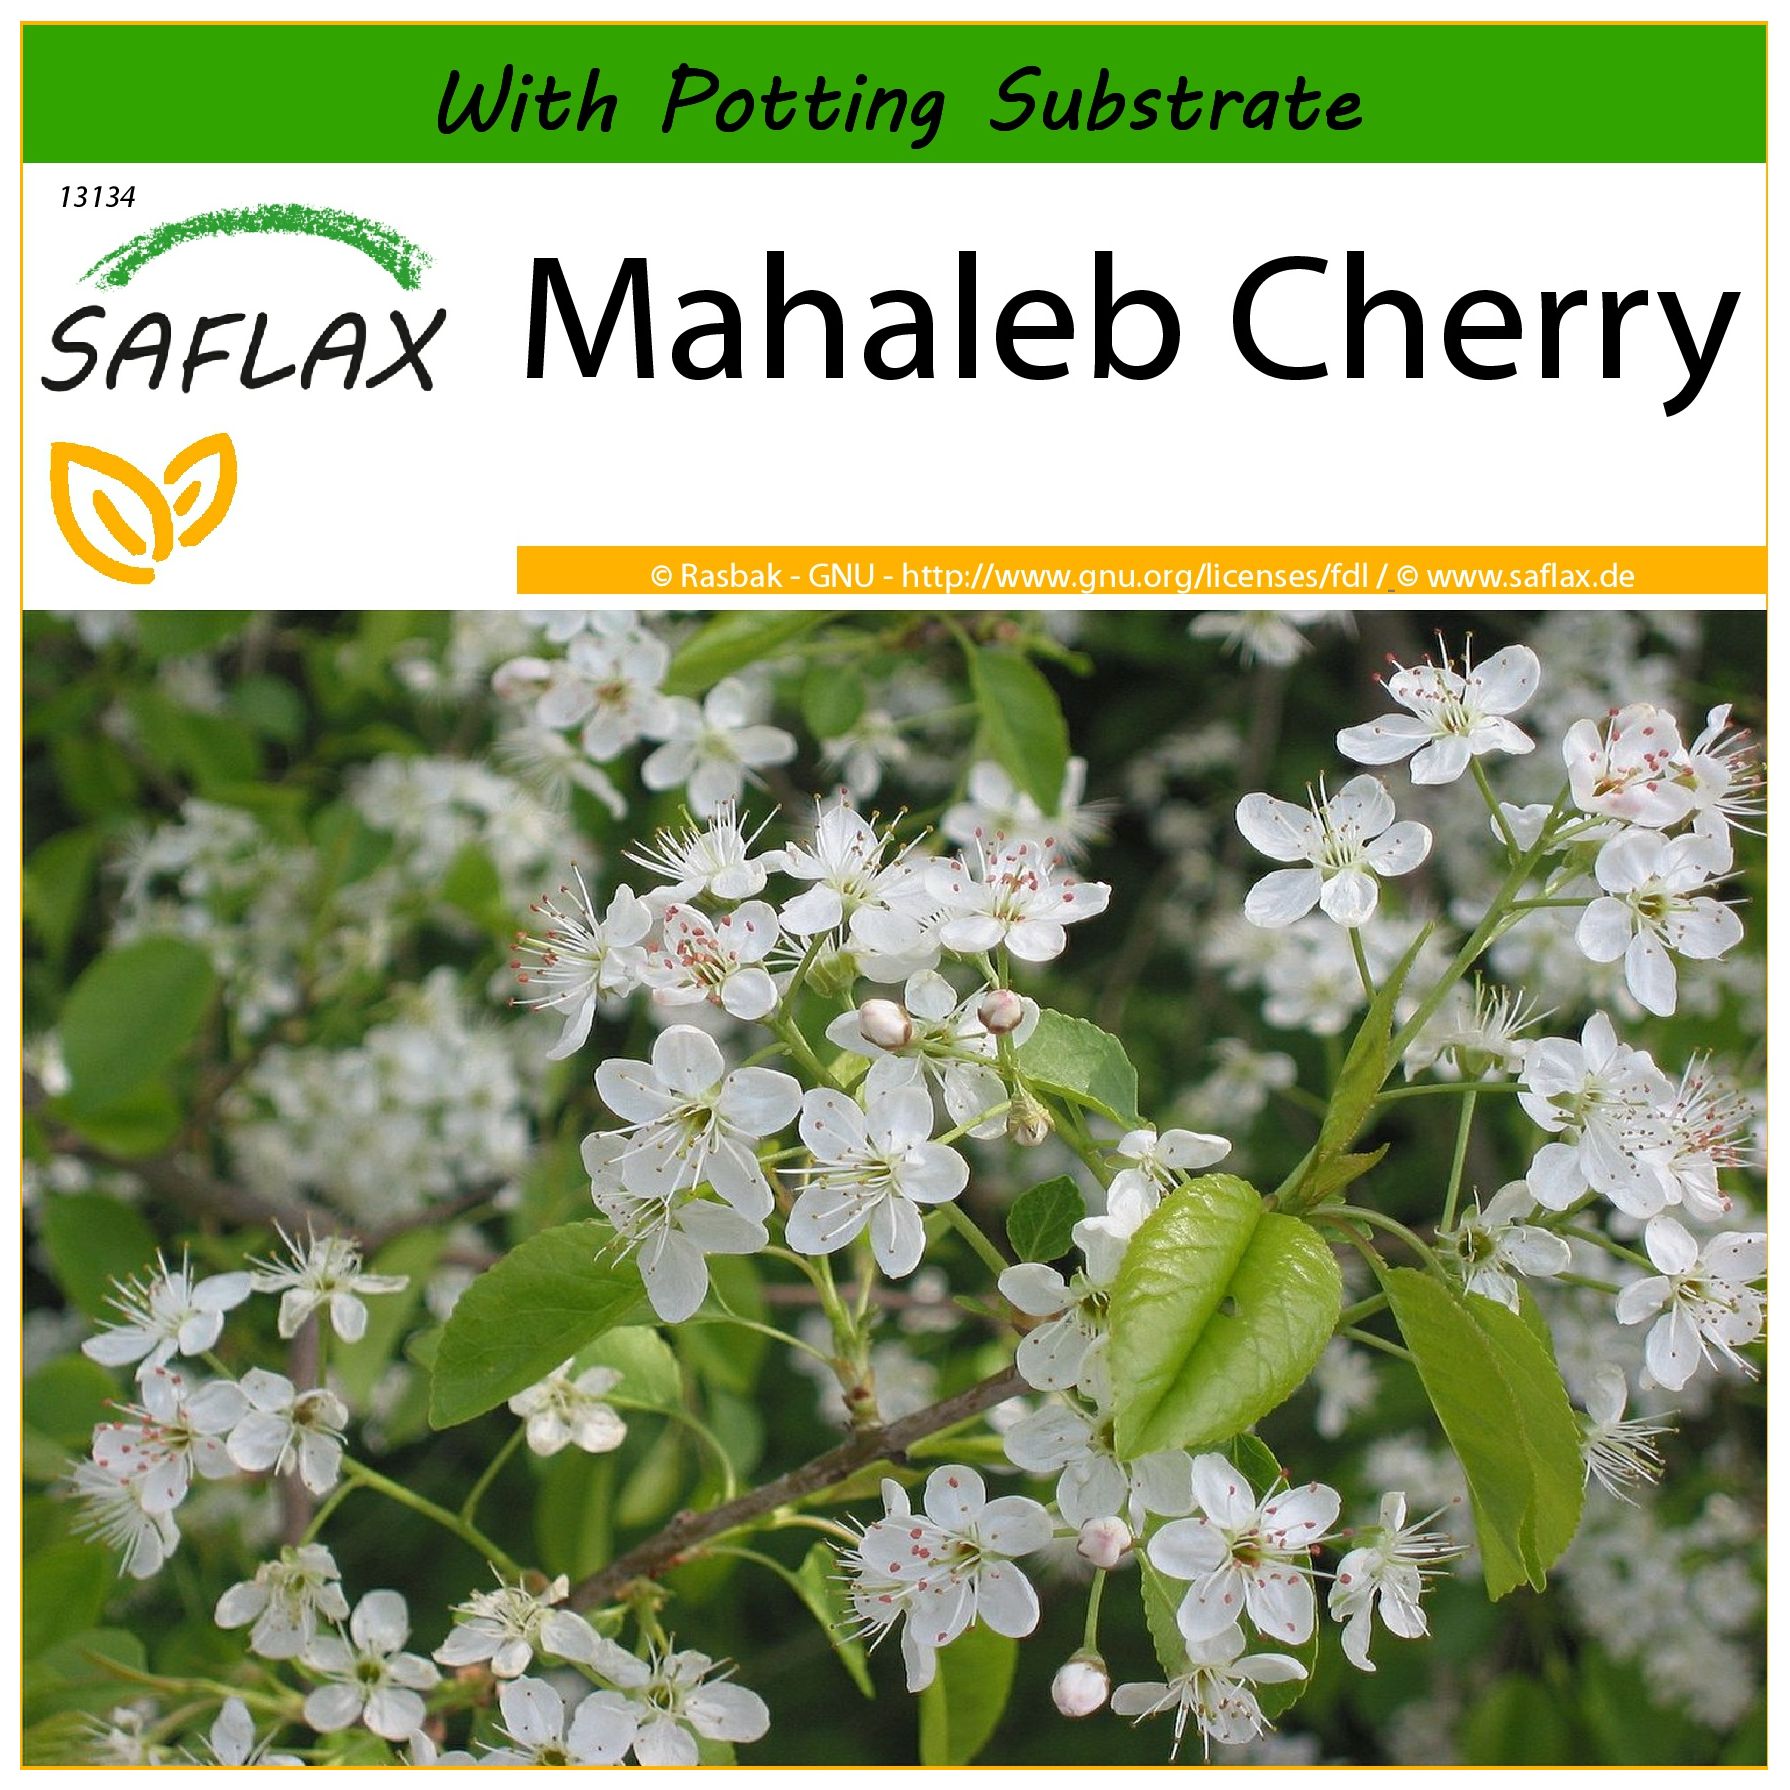 SAFLAX - Mahaleb Cherry - 30 seeds - With soil - Prunus